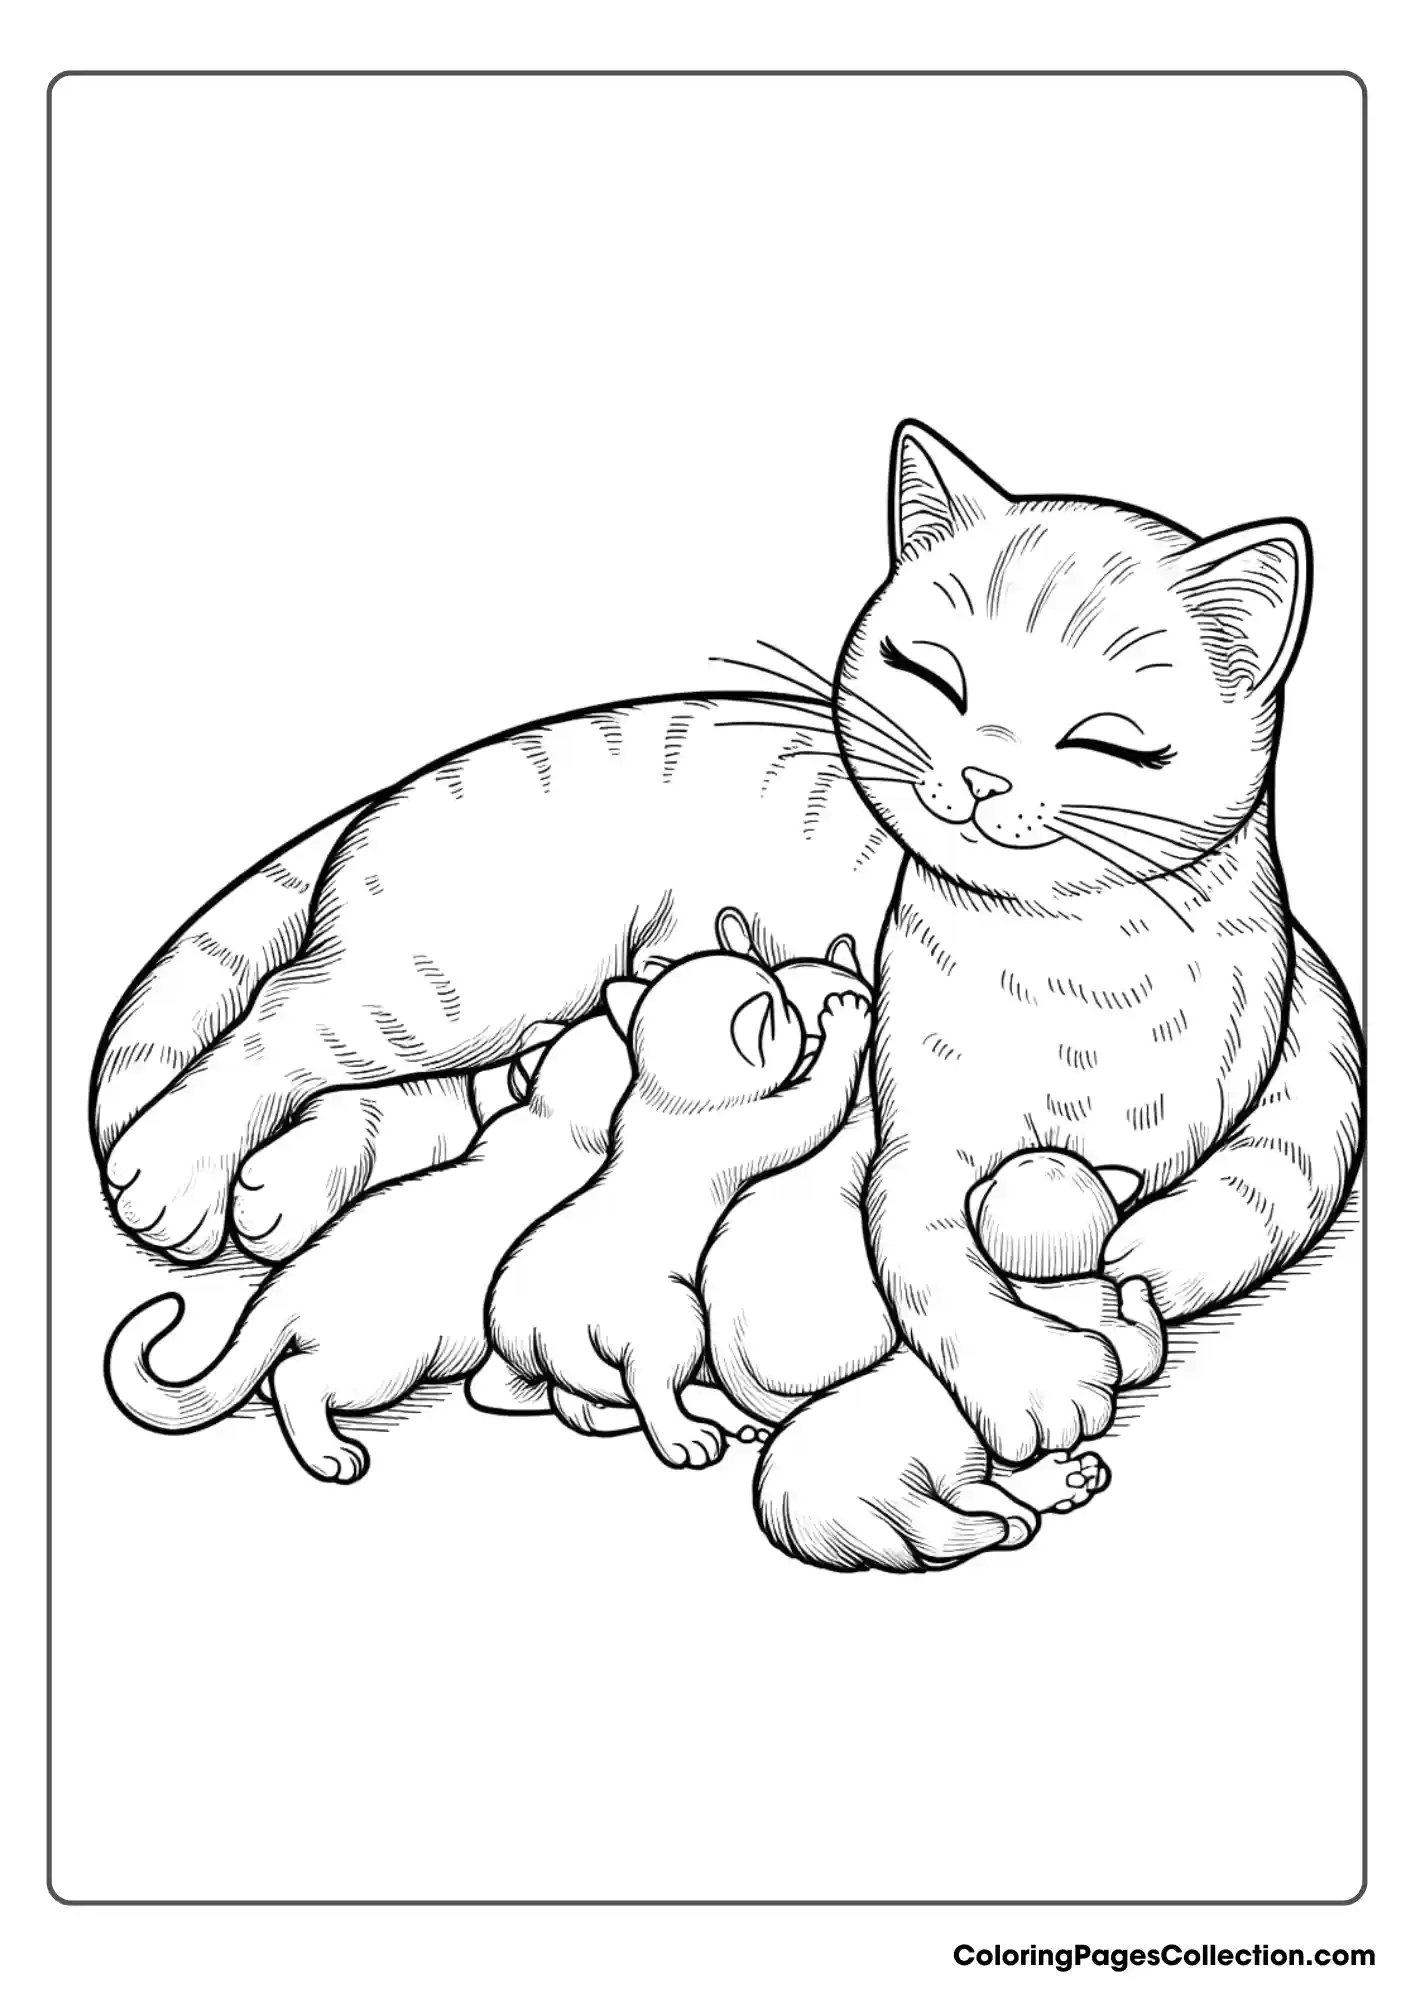 A Mother Cat Is Nursing Her Kittens